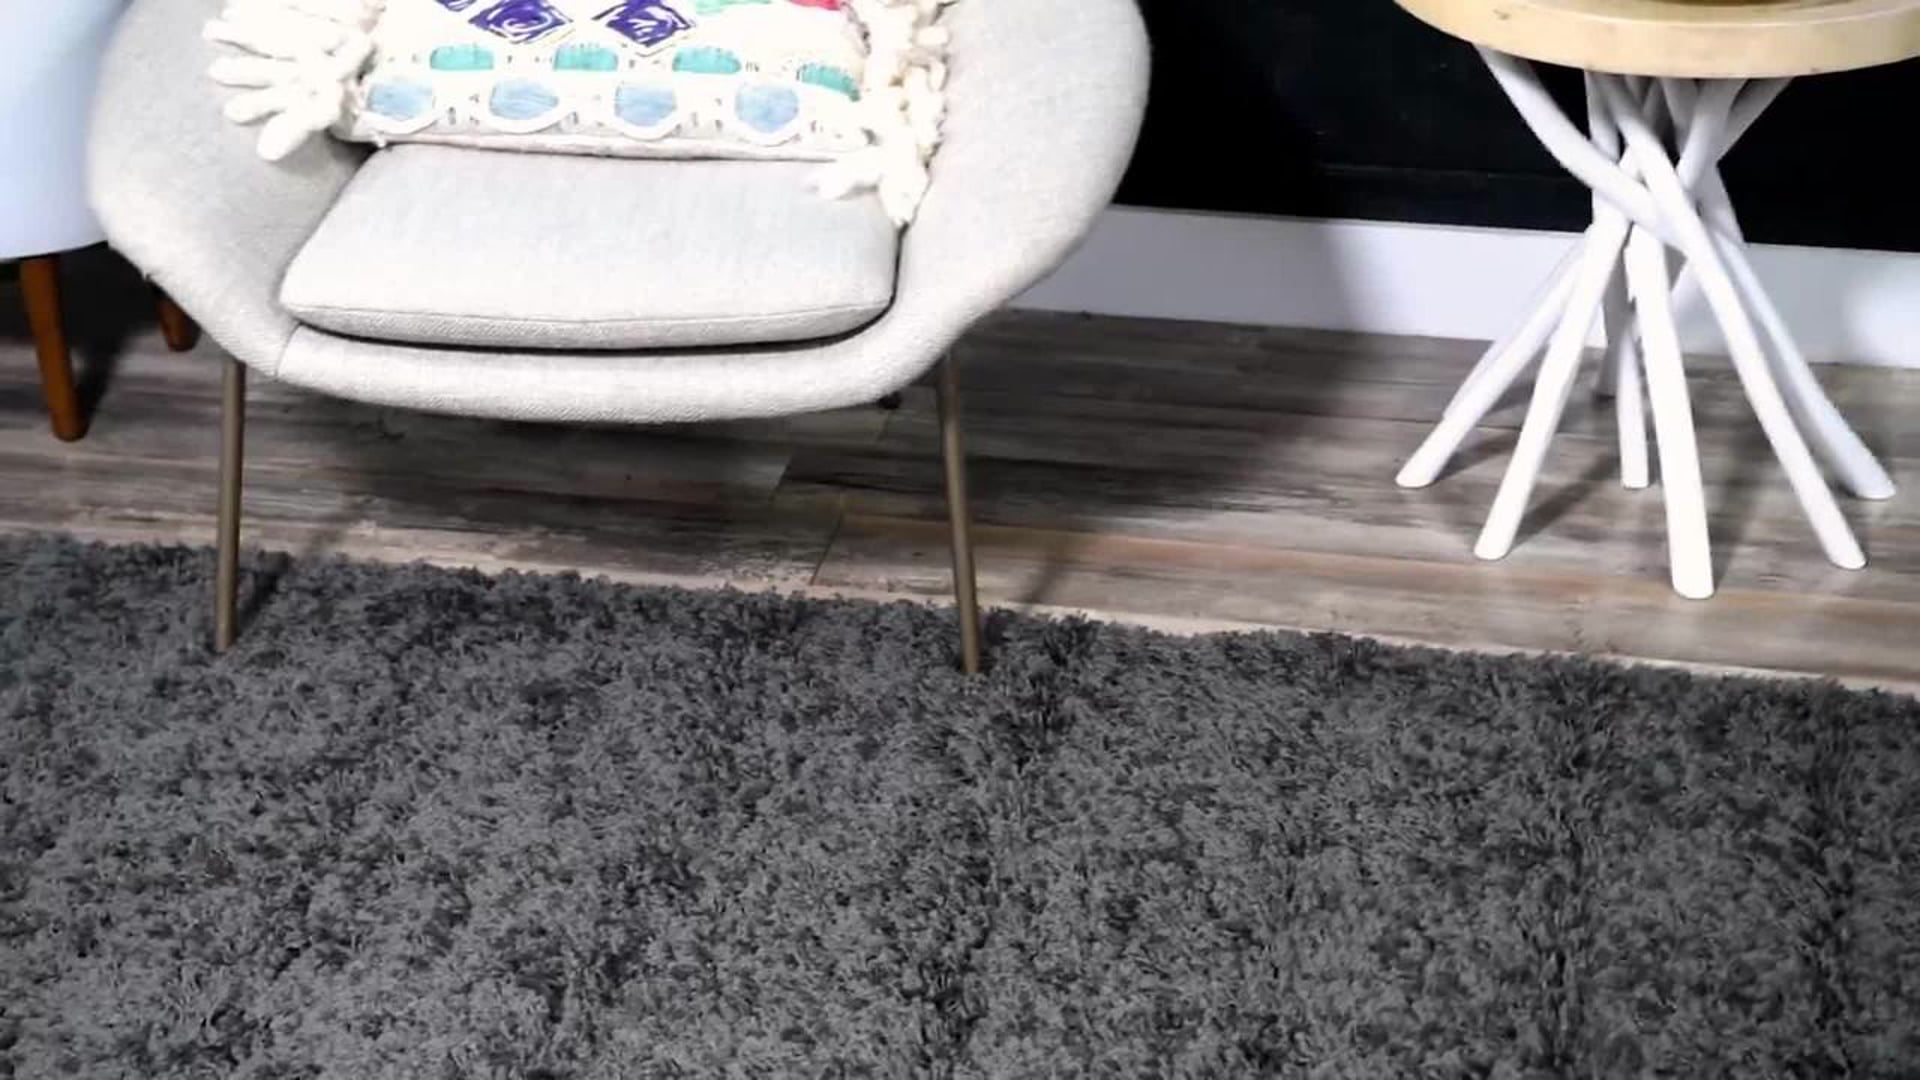 Unique Loom Graphite Gray Solid Shag 2'x6'5" Runner Rug